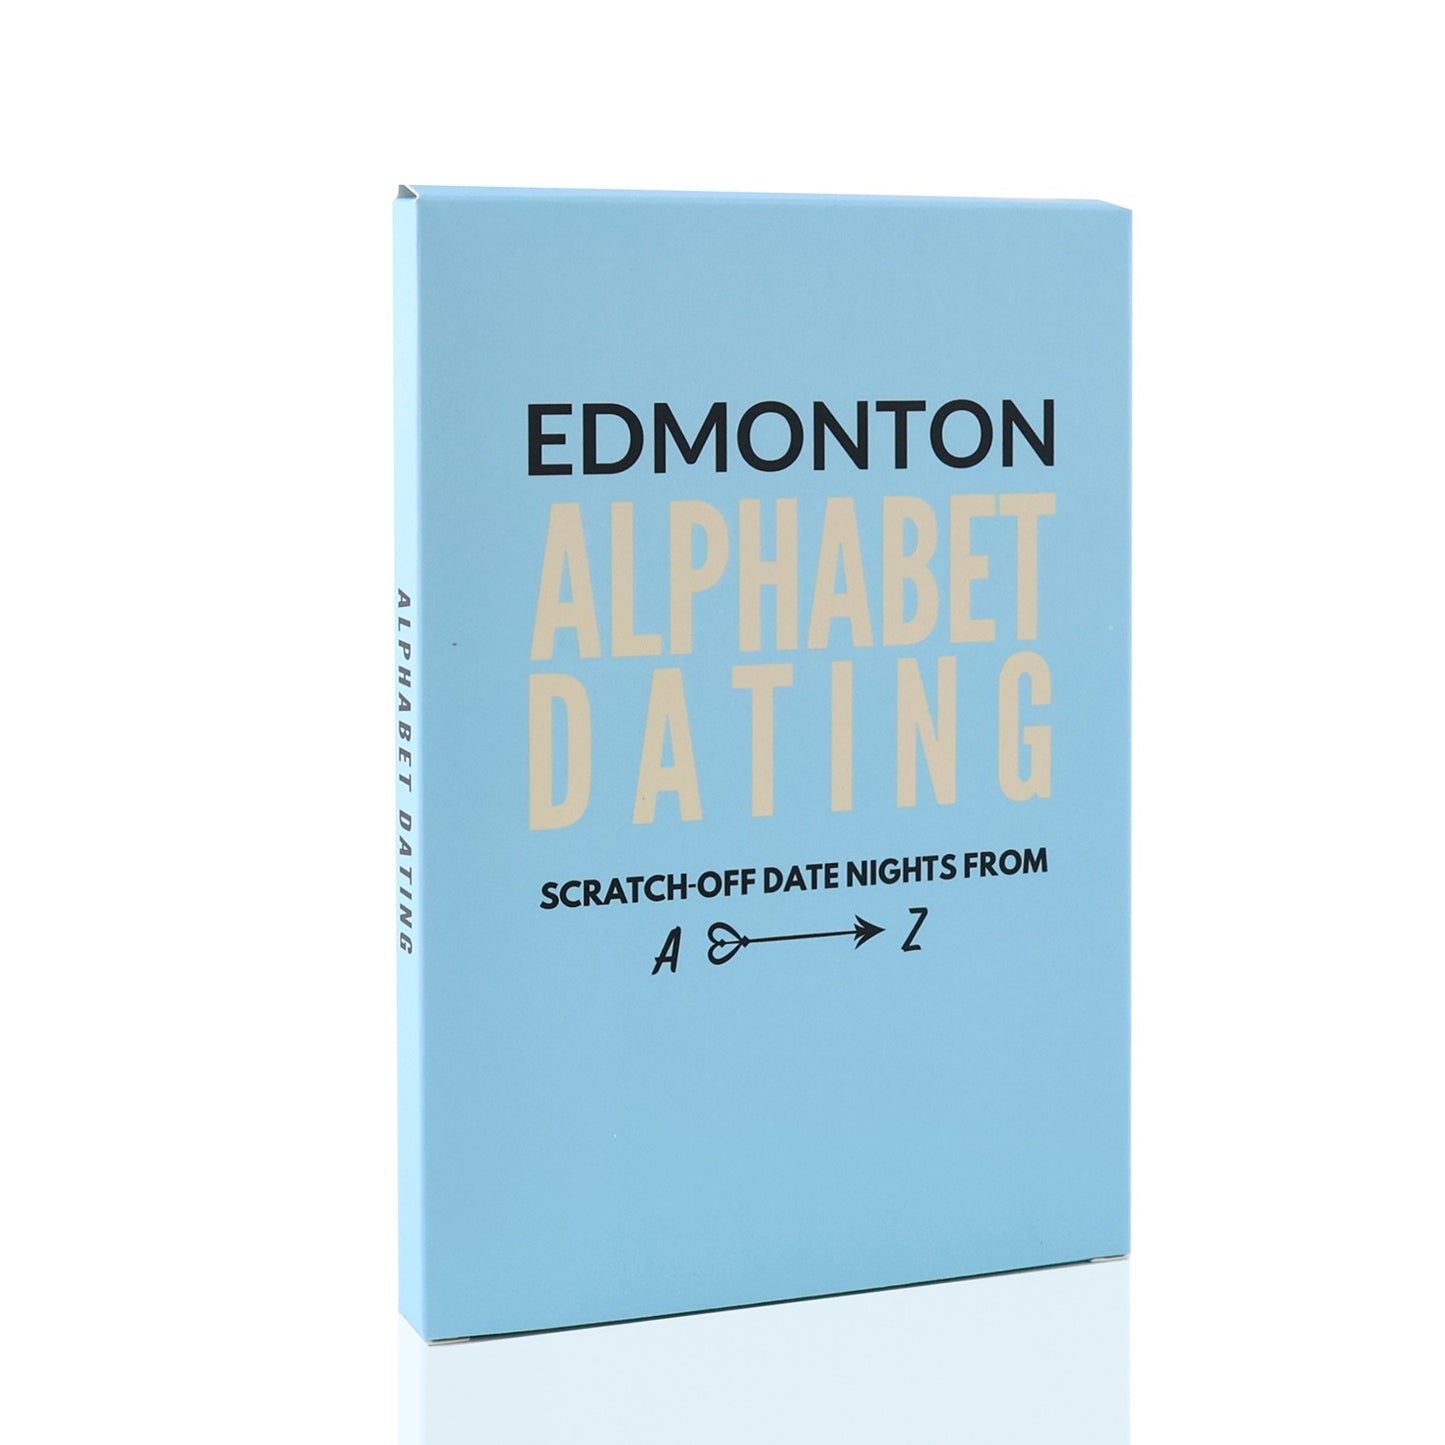 Edmonton Alphabet Dating Scratch-Off Book